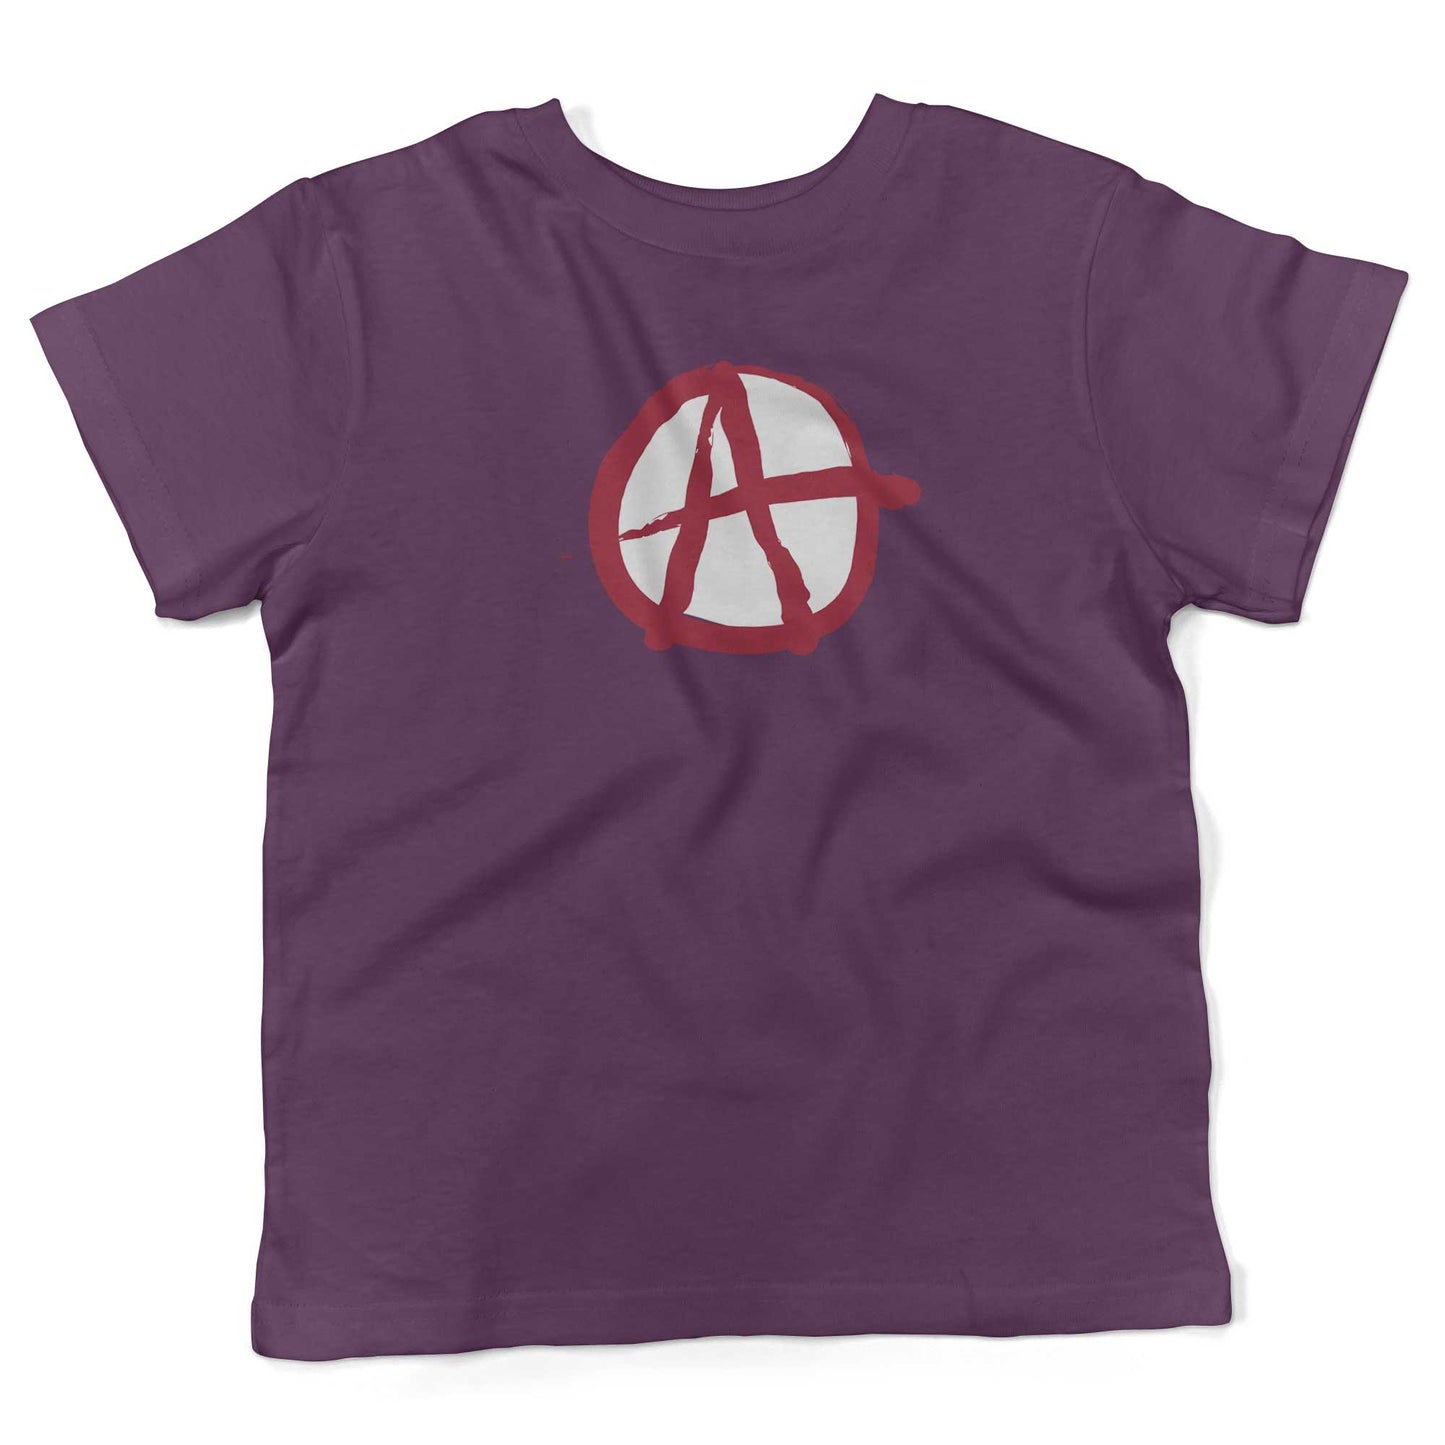 Anarchy Symbol Toddler Shirt-Organic Purple-2T